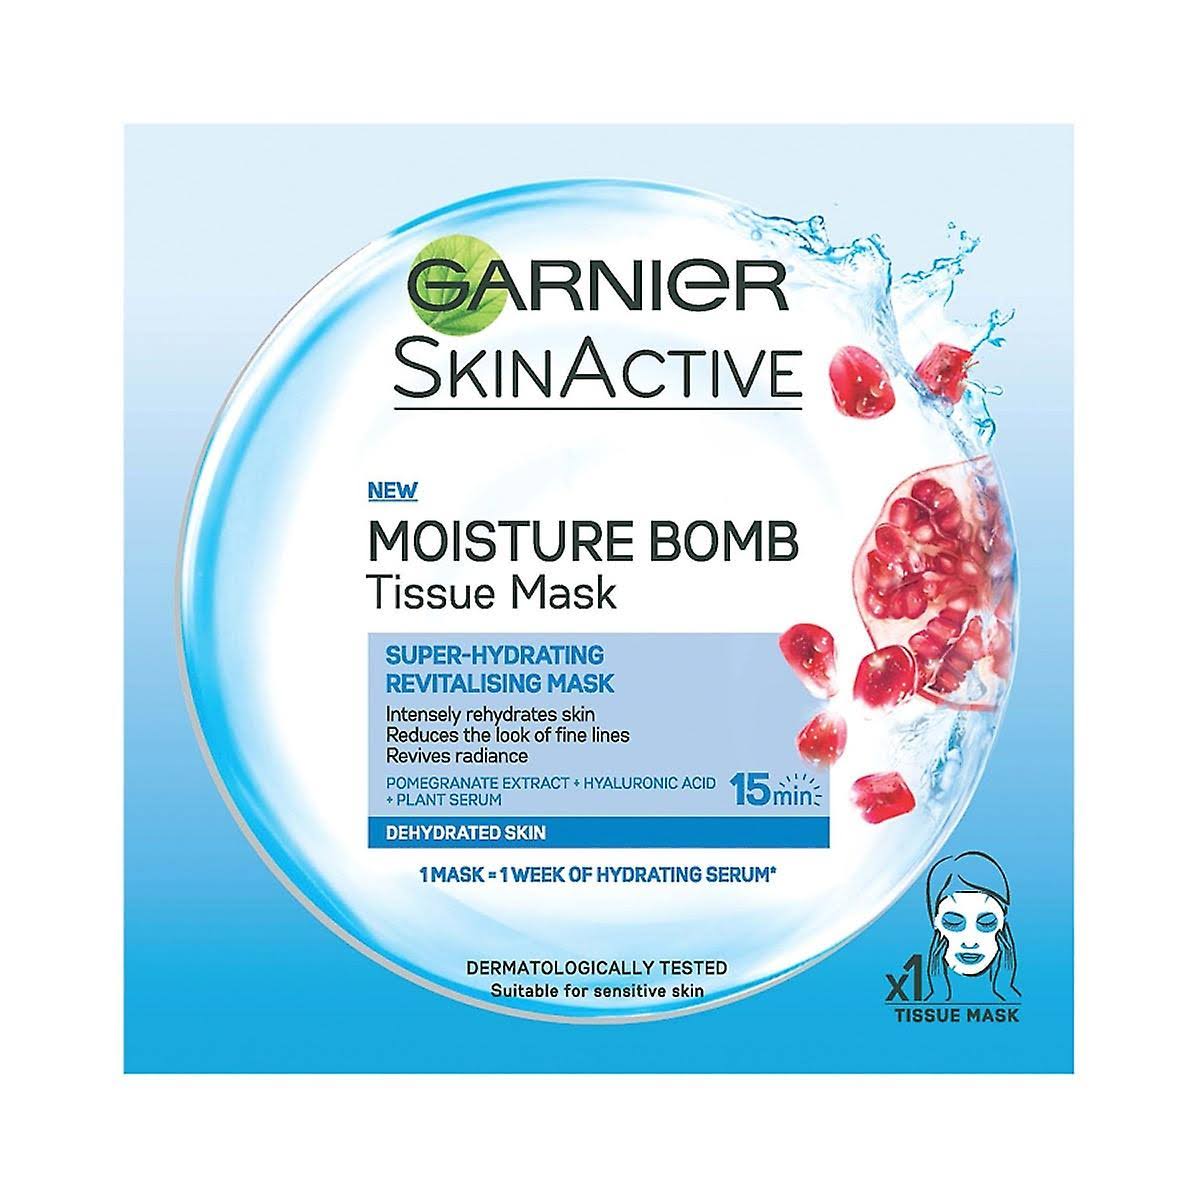 Garnier Moisture Bomb Green Tea Hydrating Face Sheet Mask